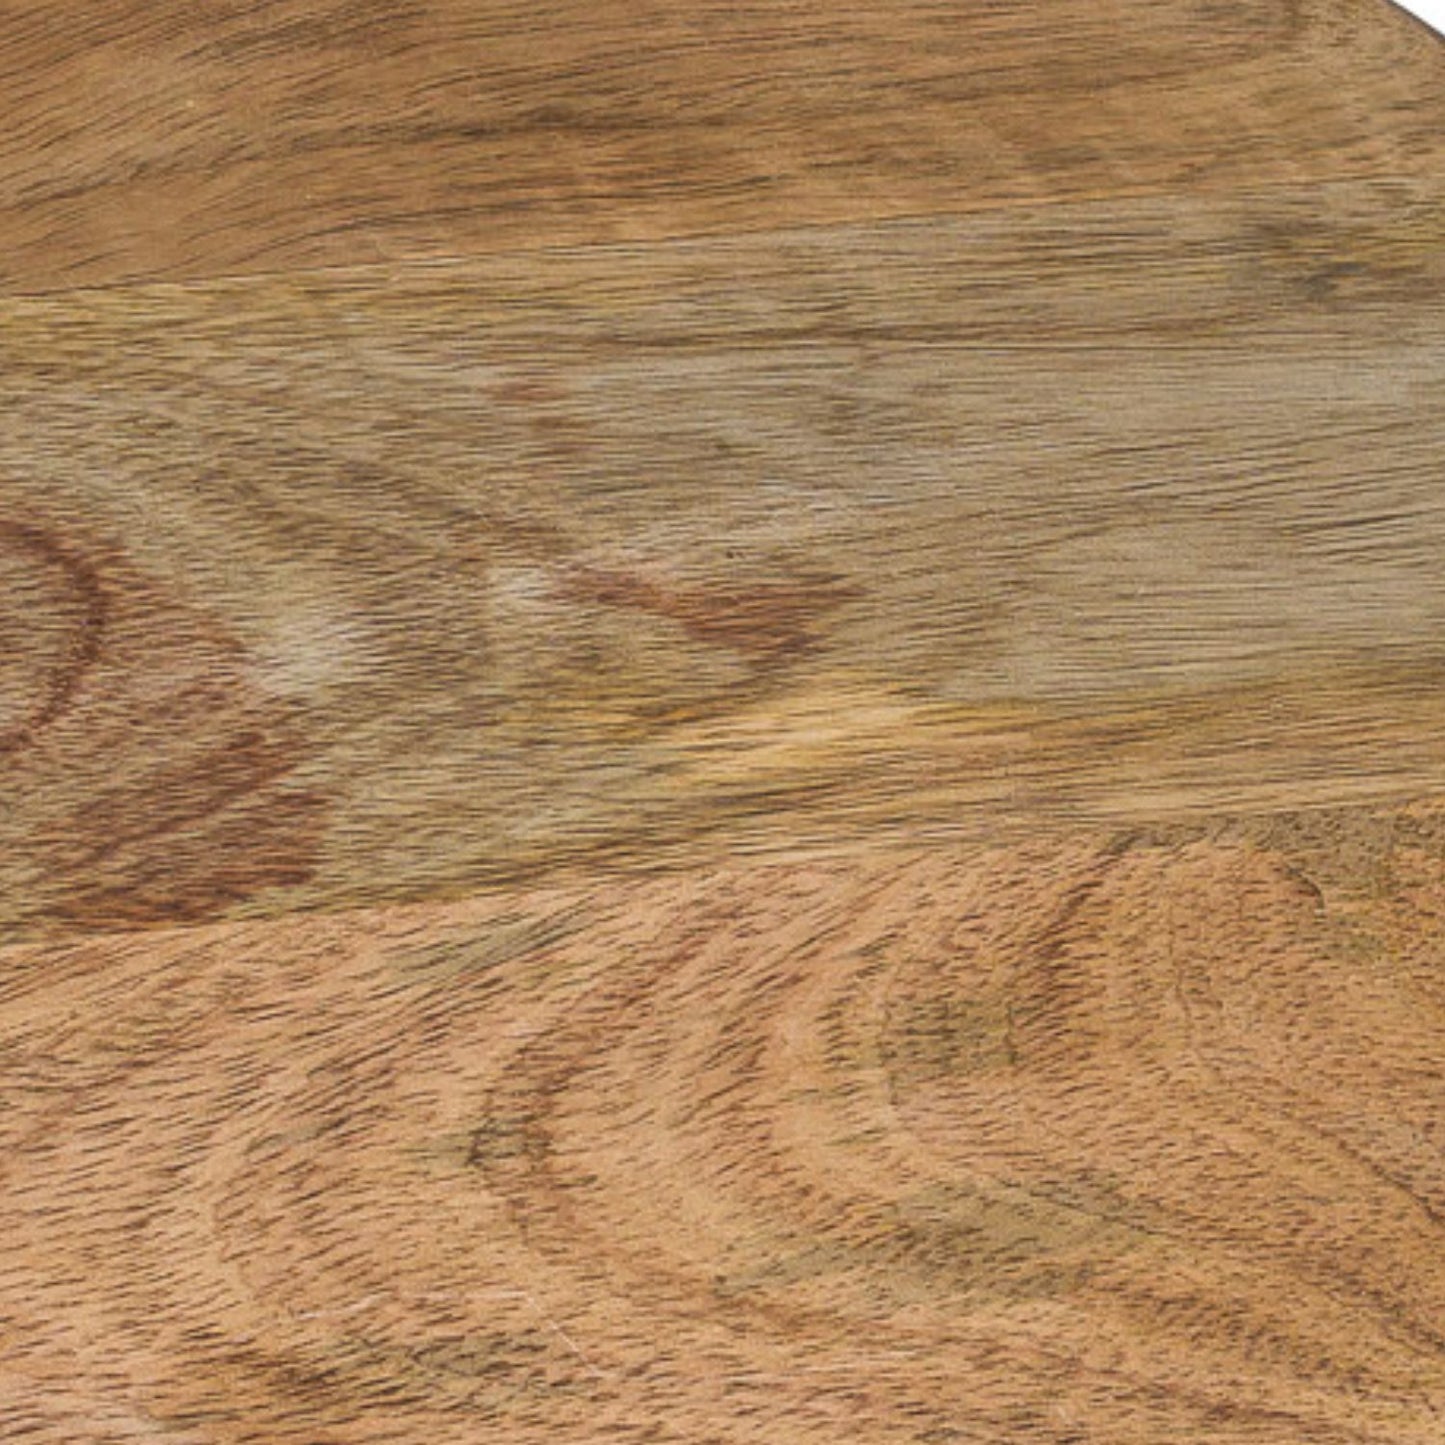 Large Circular Wooden Chopping Board